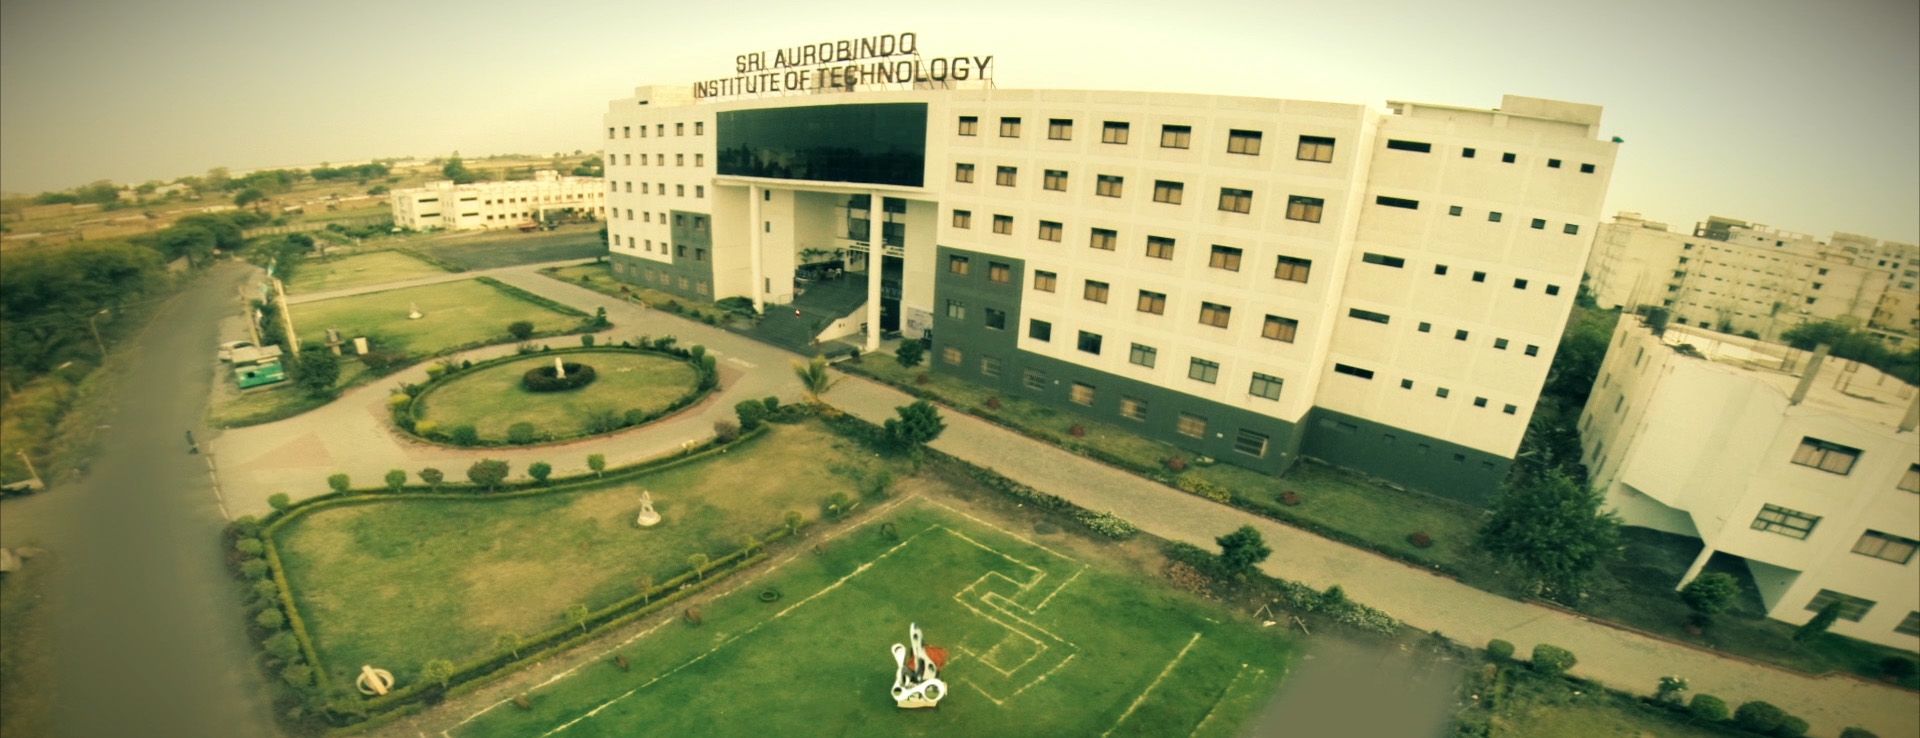 SAIT Campus View(1)